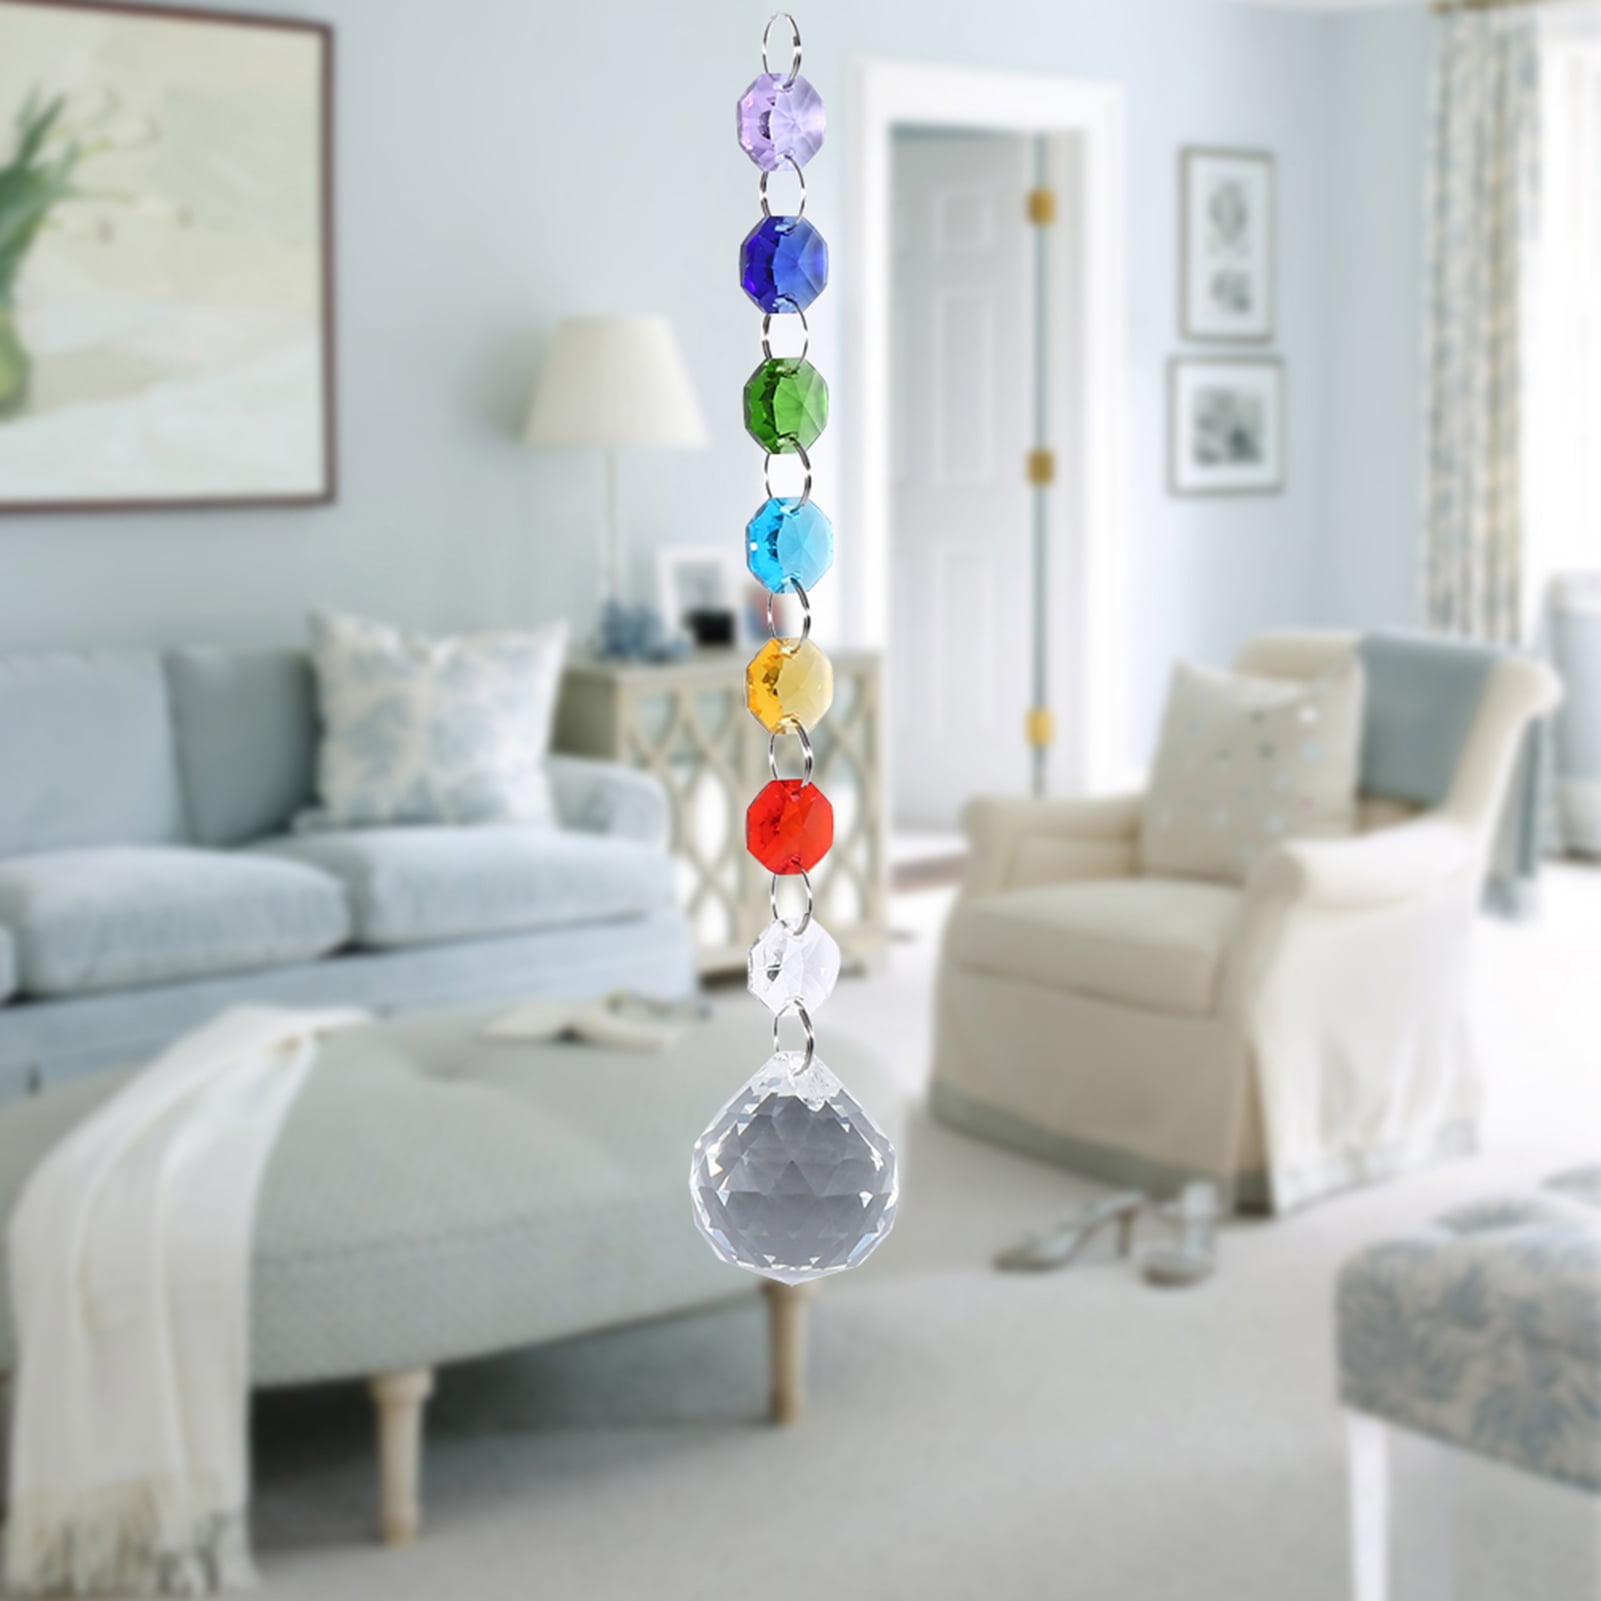 Hanging Window Handmade Rainbow Suncatcher Crystal Prisms Ball Xmas Lamp Decor 